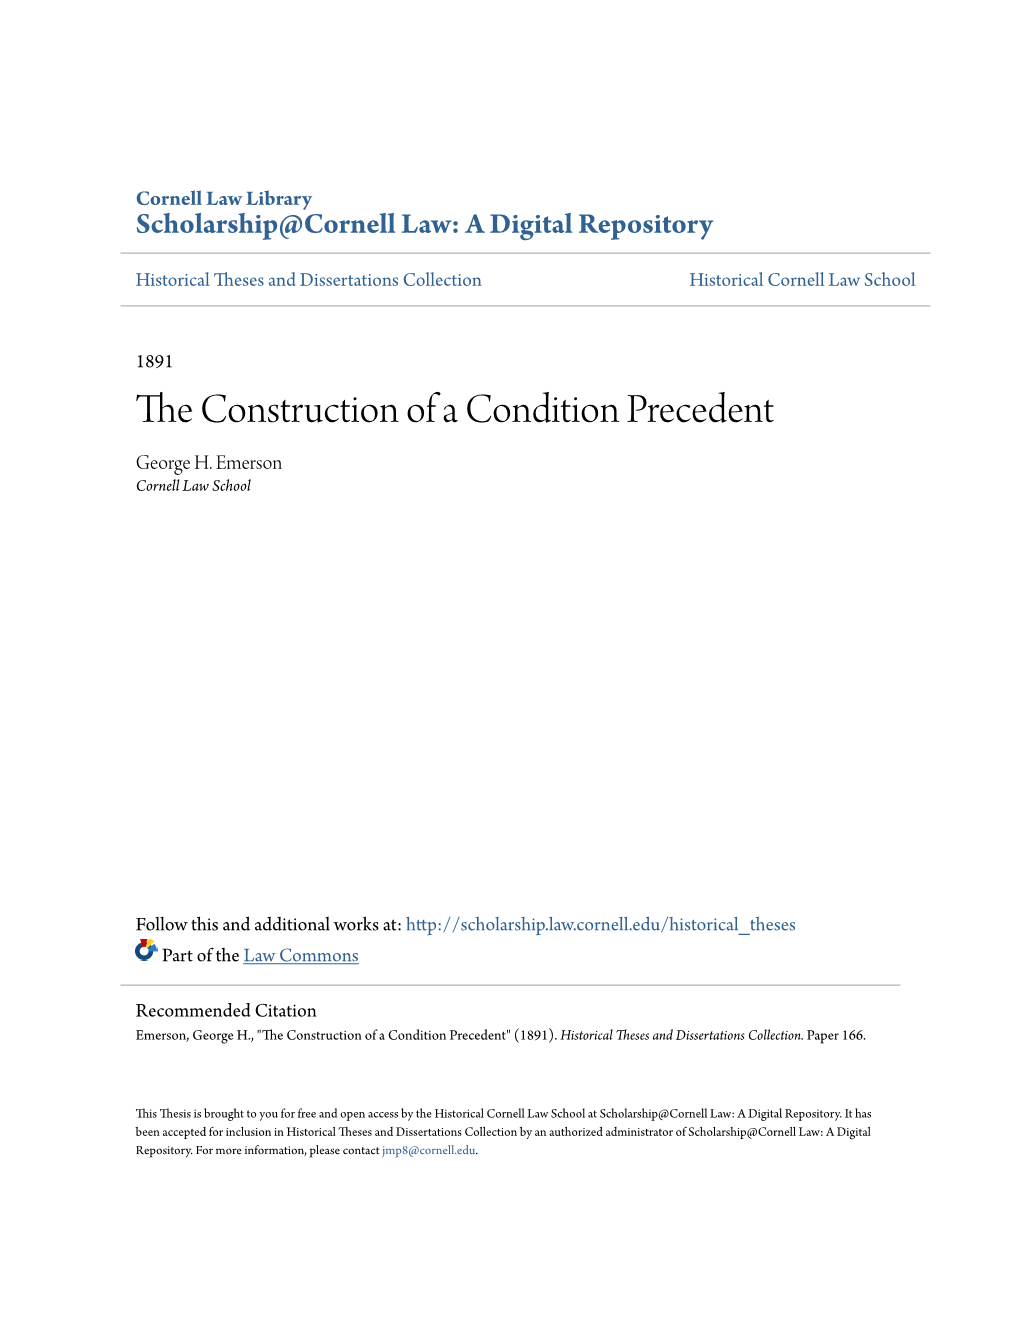 The Construction of a Condition Precedent